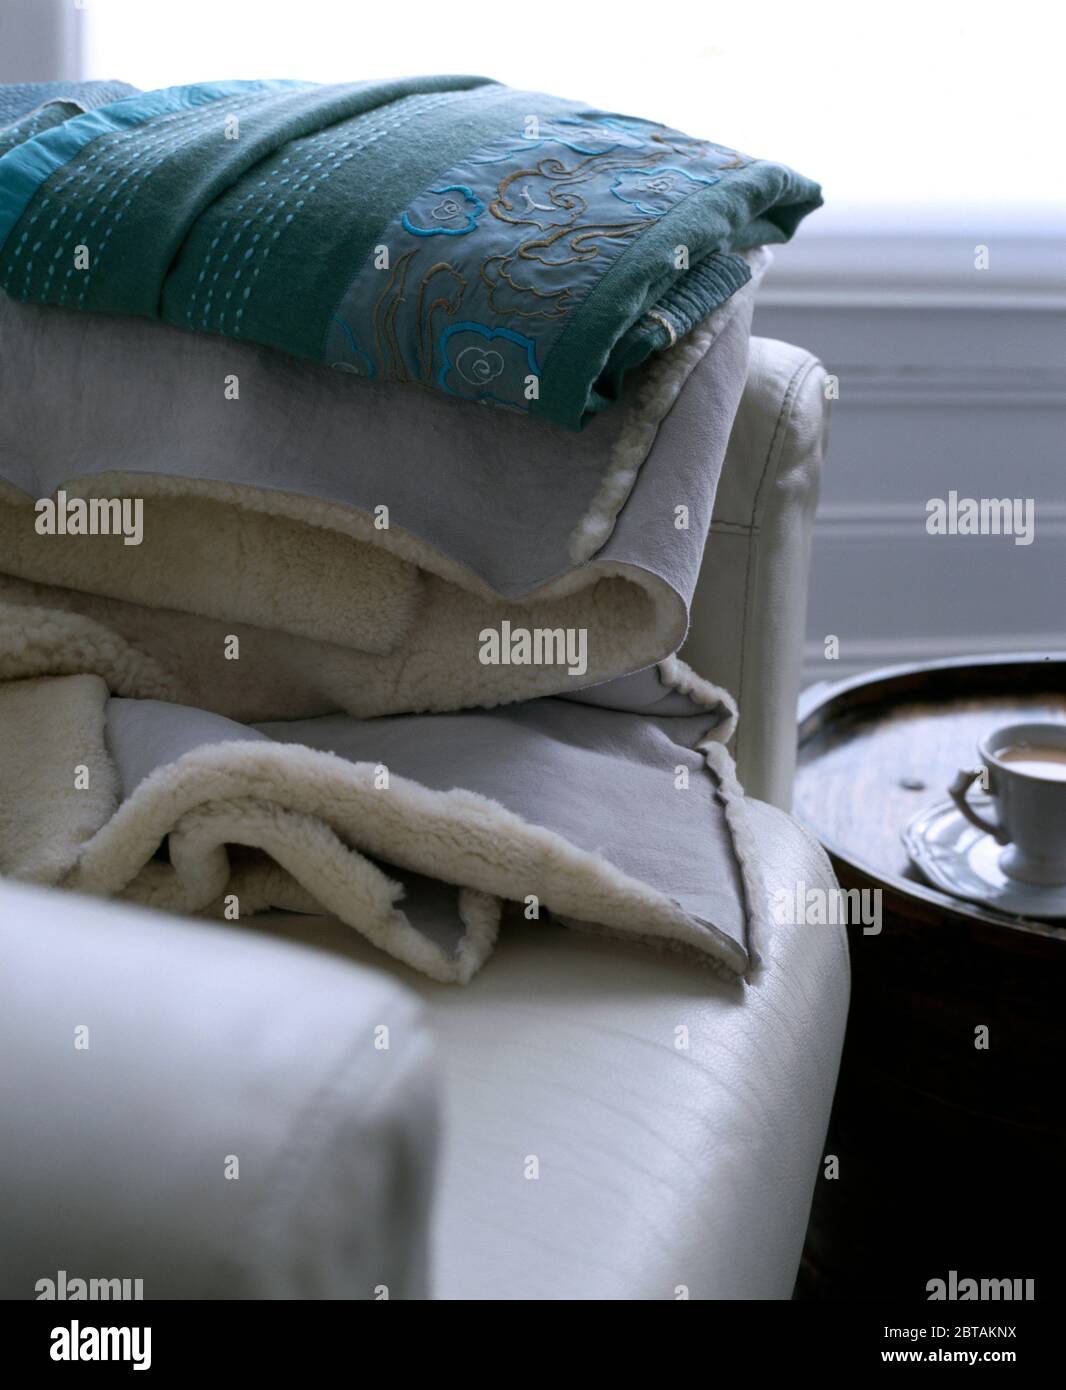 Blue cotton and sheepskin throws on white leather armchair Stock Photo